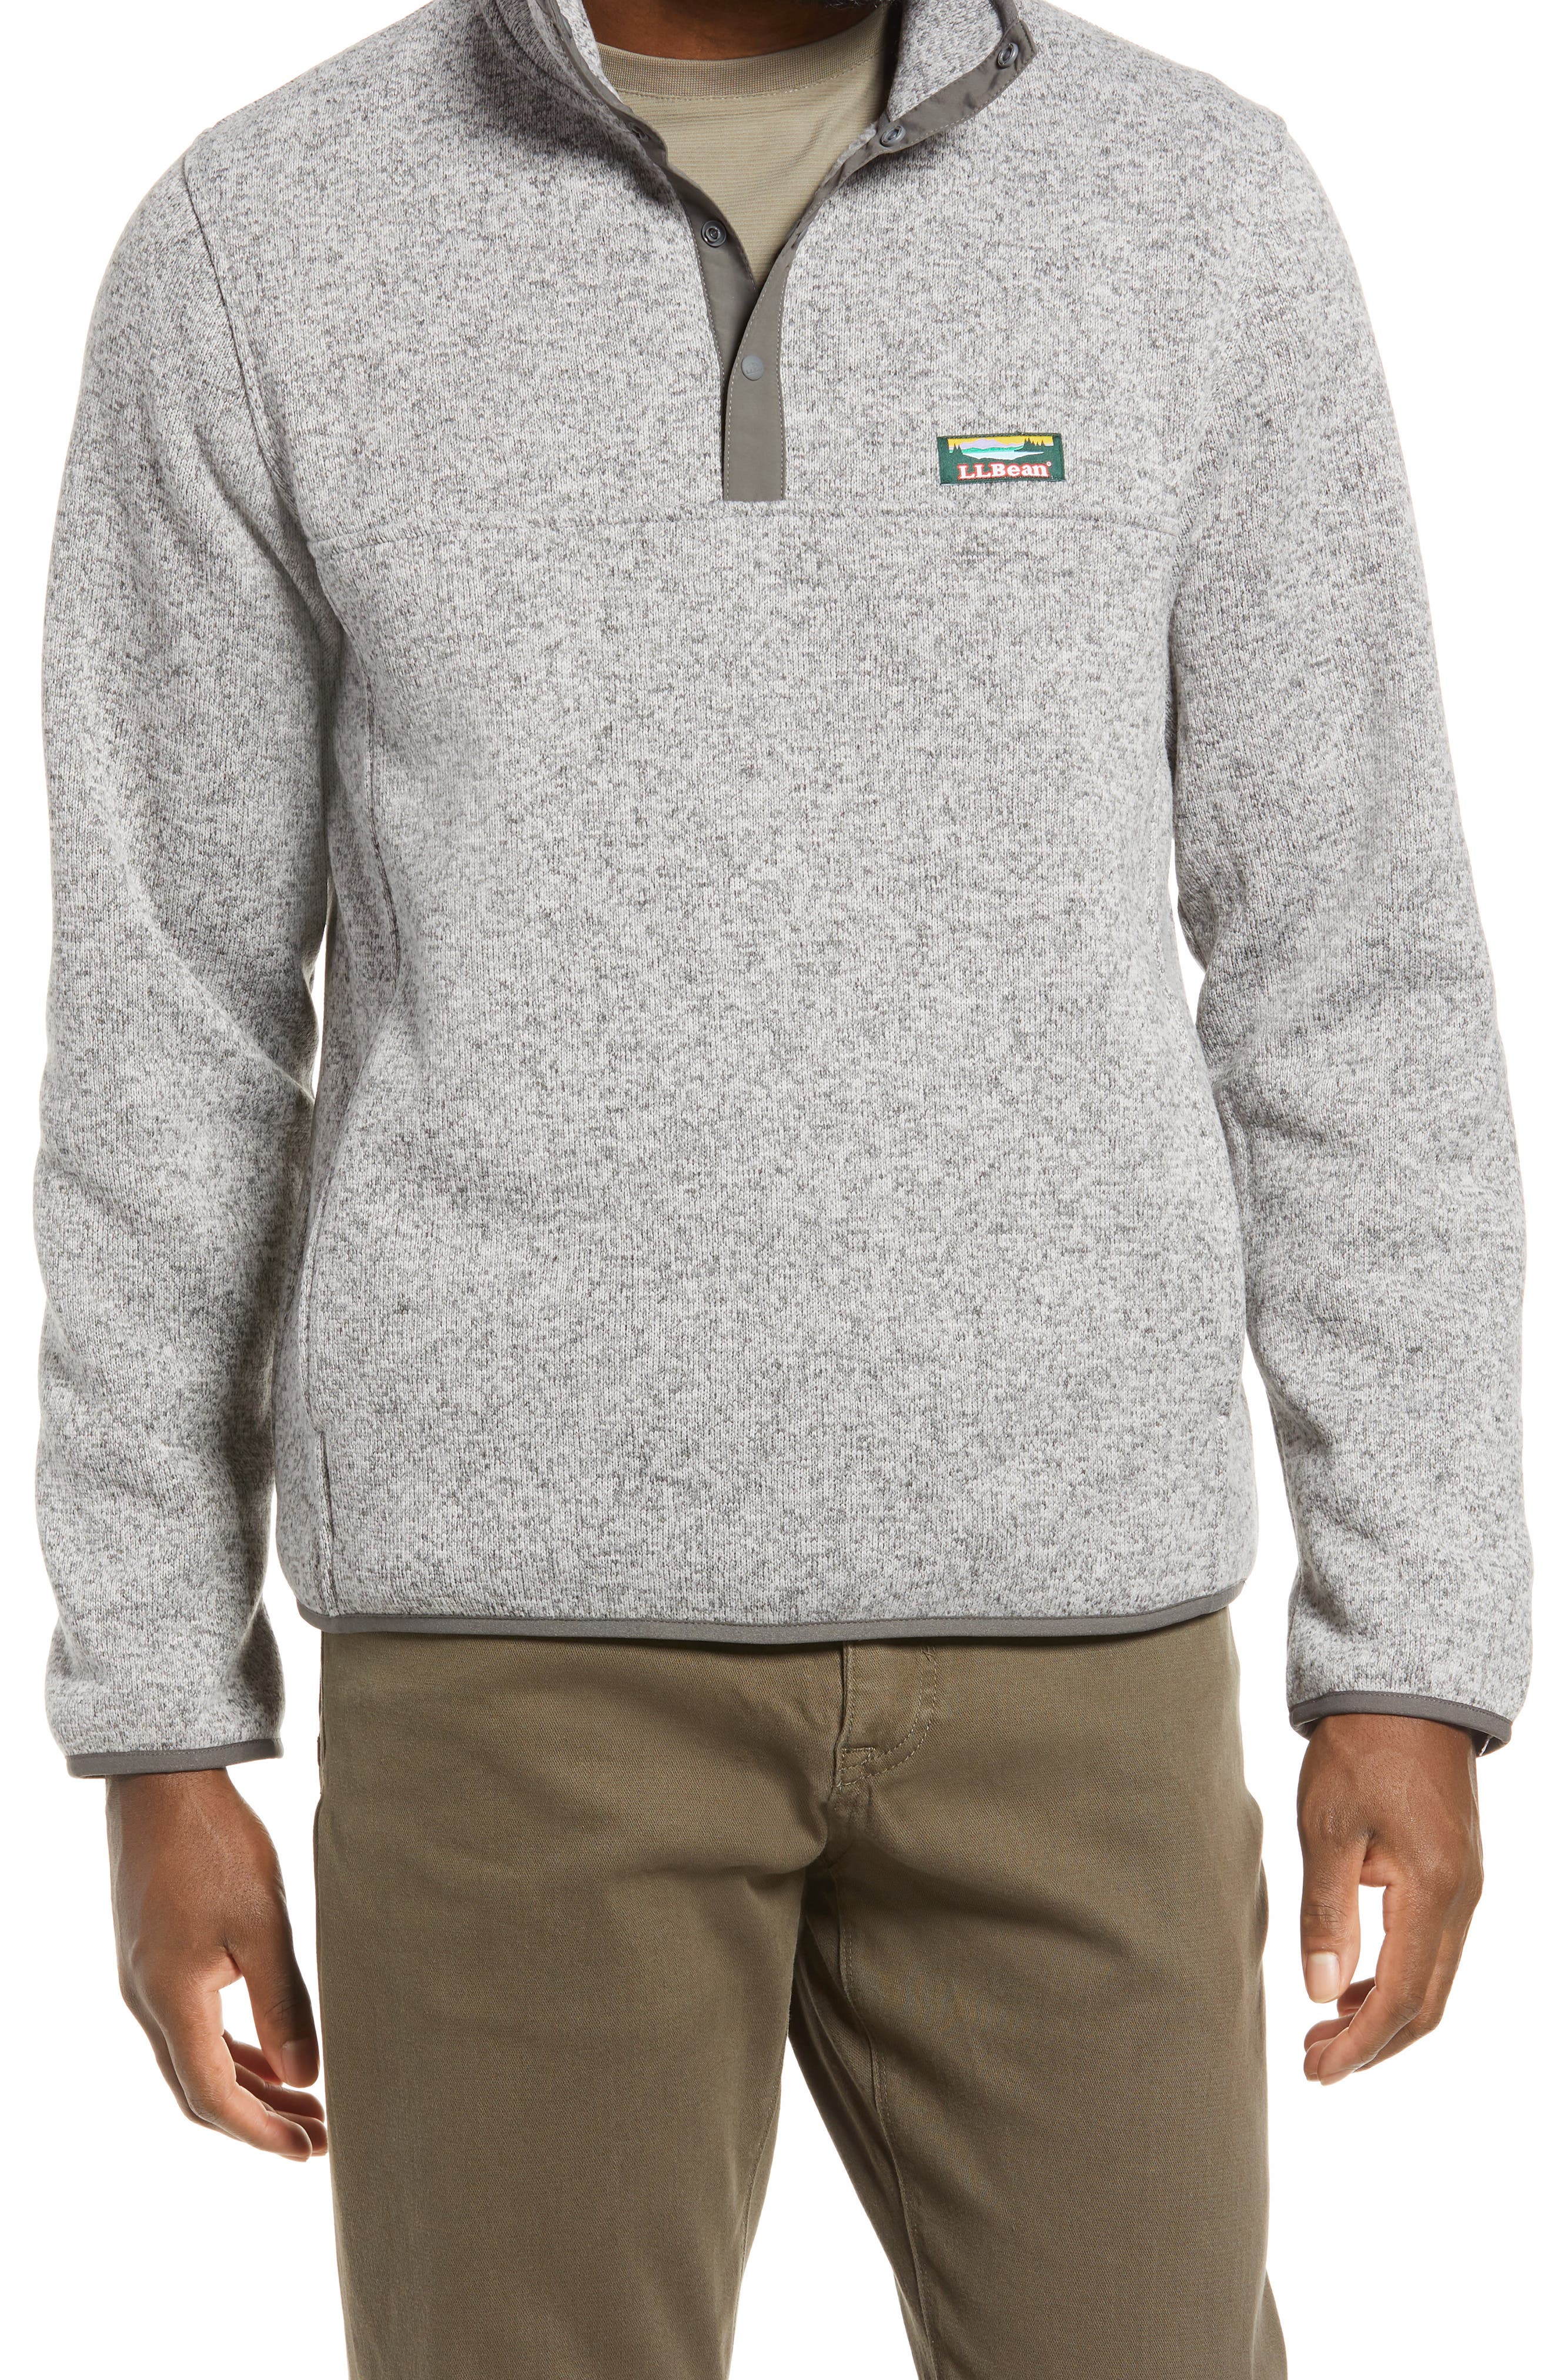 discount 68% NoName sweatshirt WOMEN FASHION Jumpers & Sweatshirts Fleece Gray S 